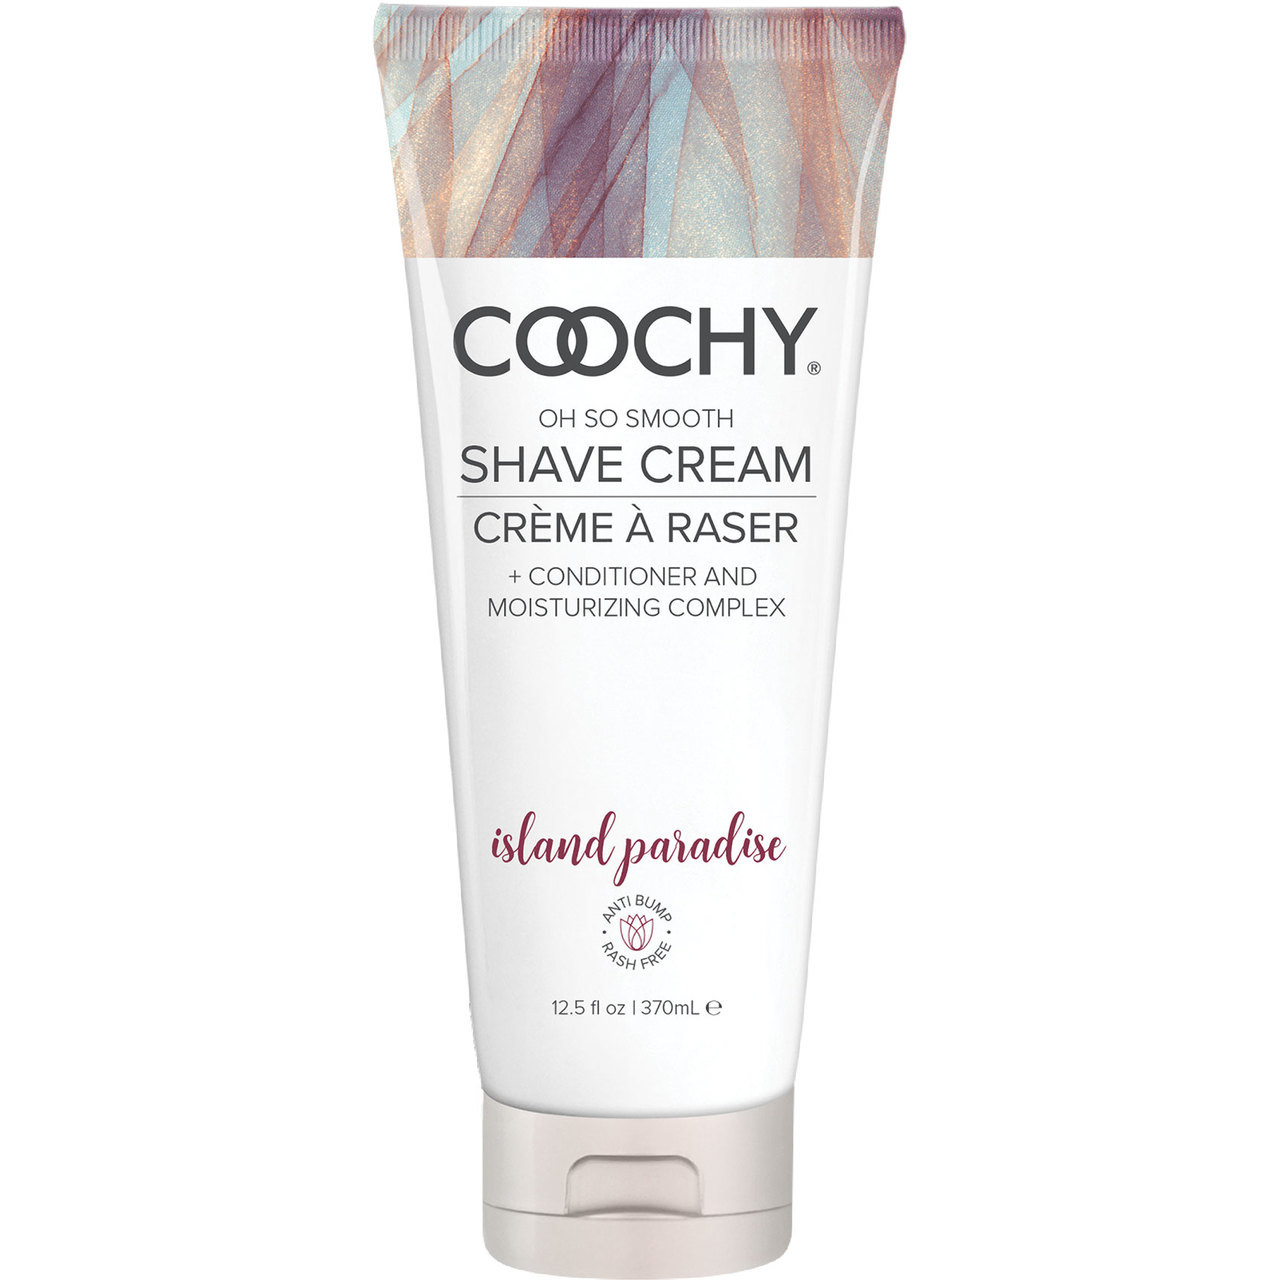 COOCHY Oh So Smooth Shave Cream - Island Paradise